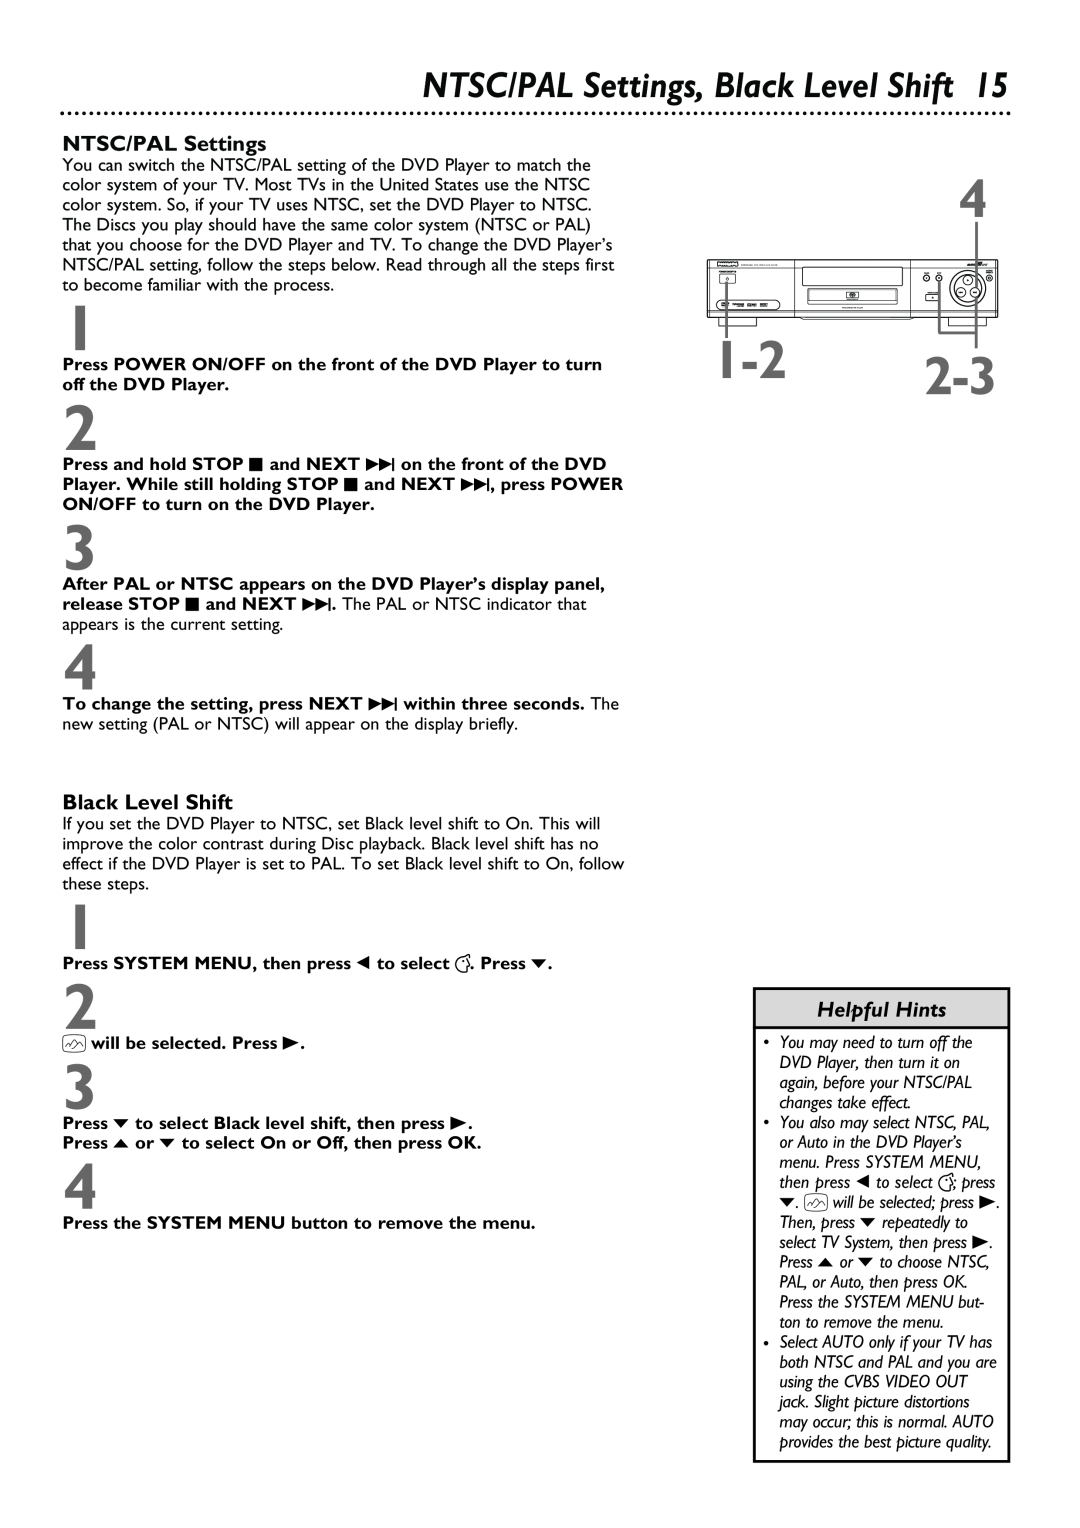 Philips DVD962SA owner manual NTSC/PAL Settings, Black Level Shift, Helpful Hints 